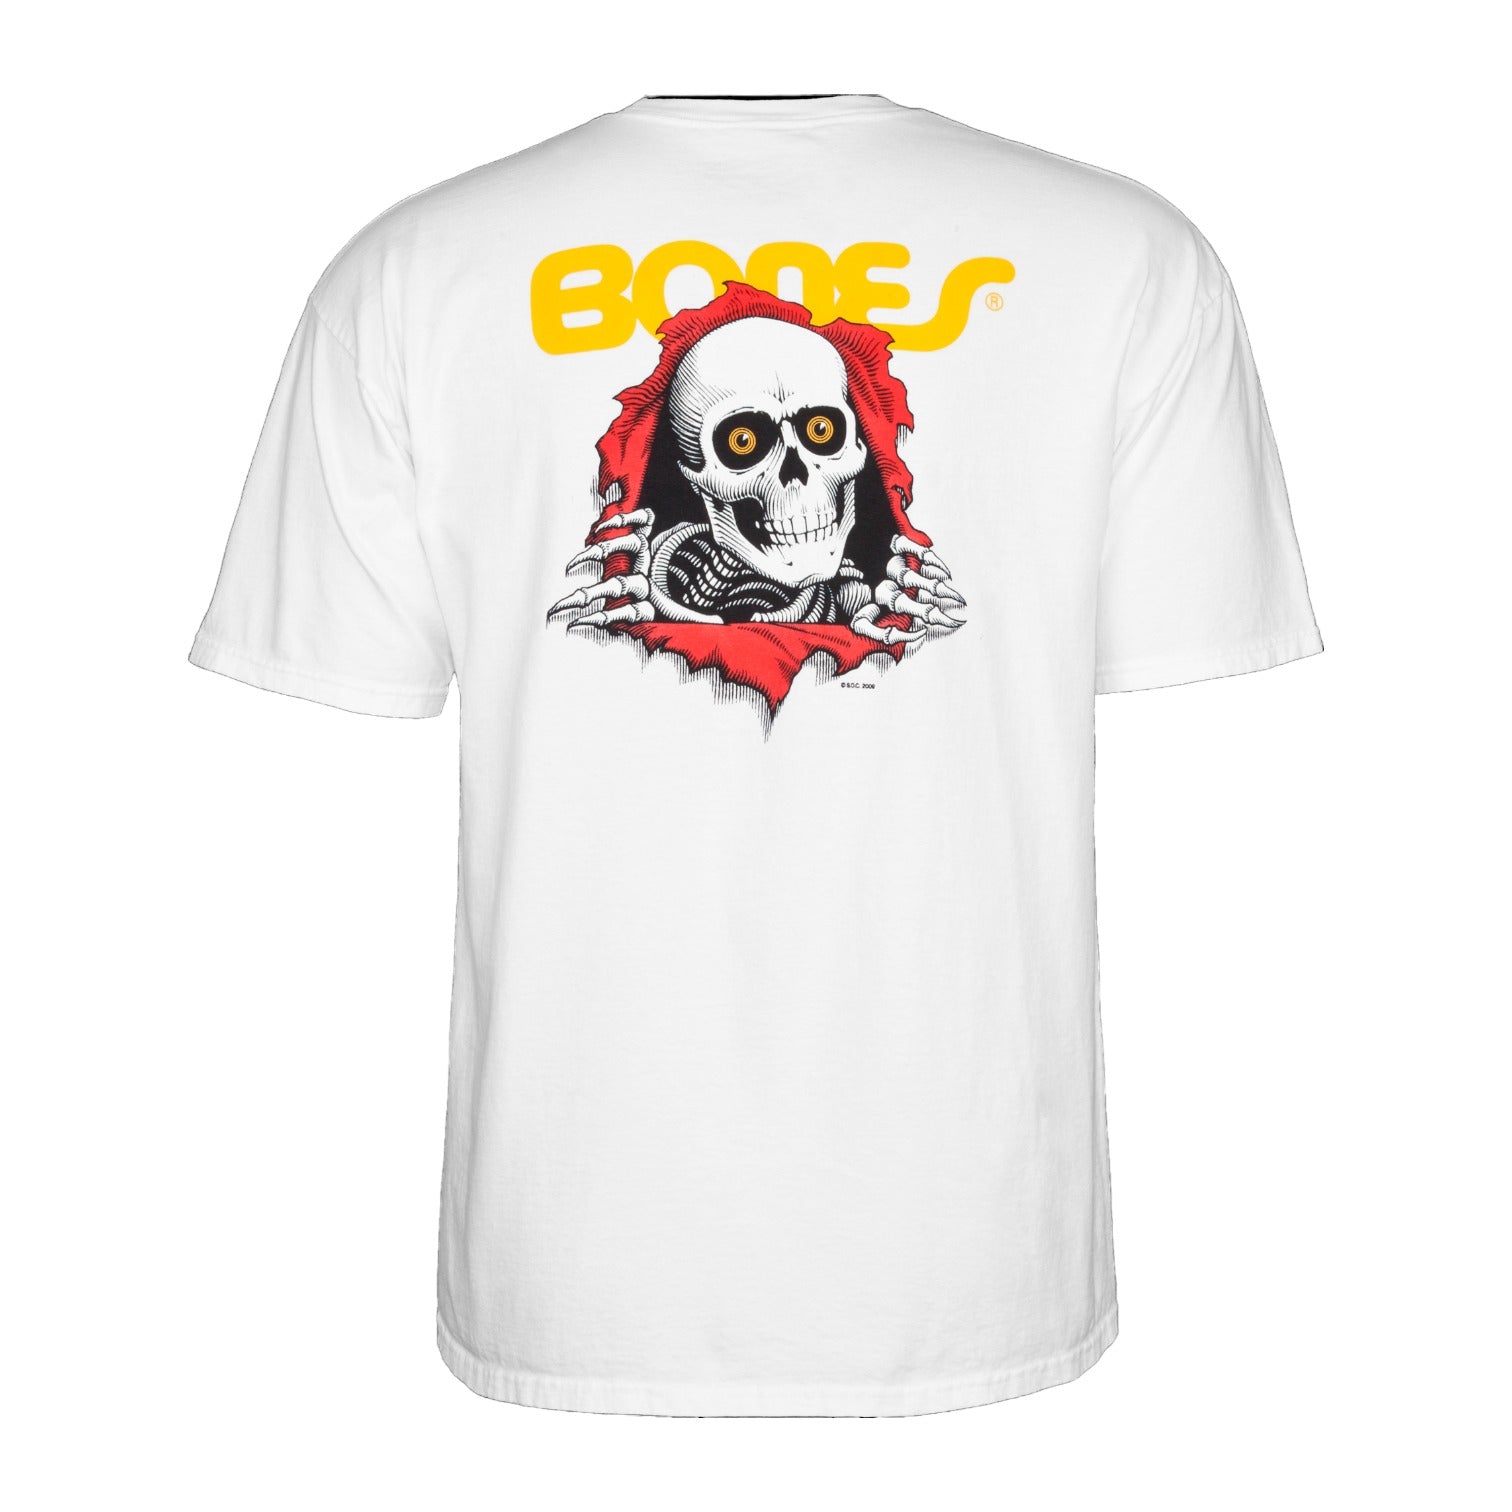 Powell Peralta Ripper T-Shirt - White